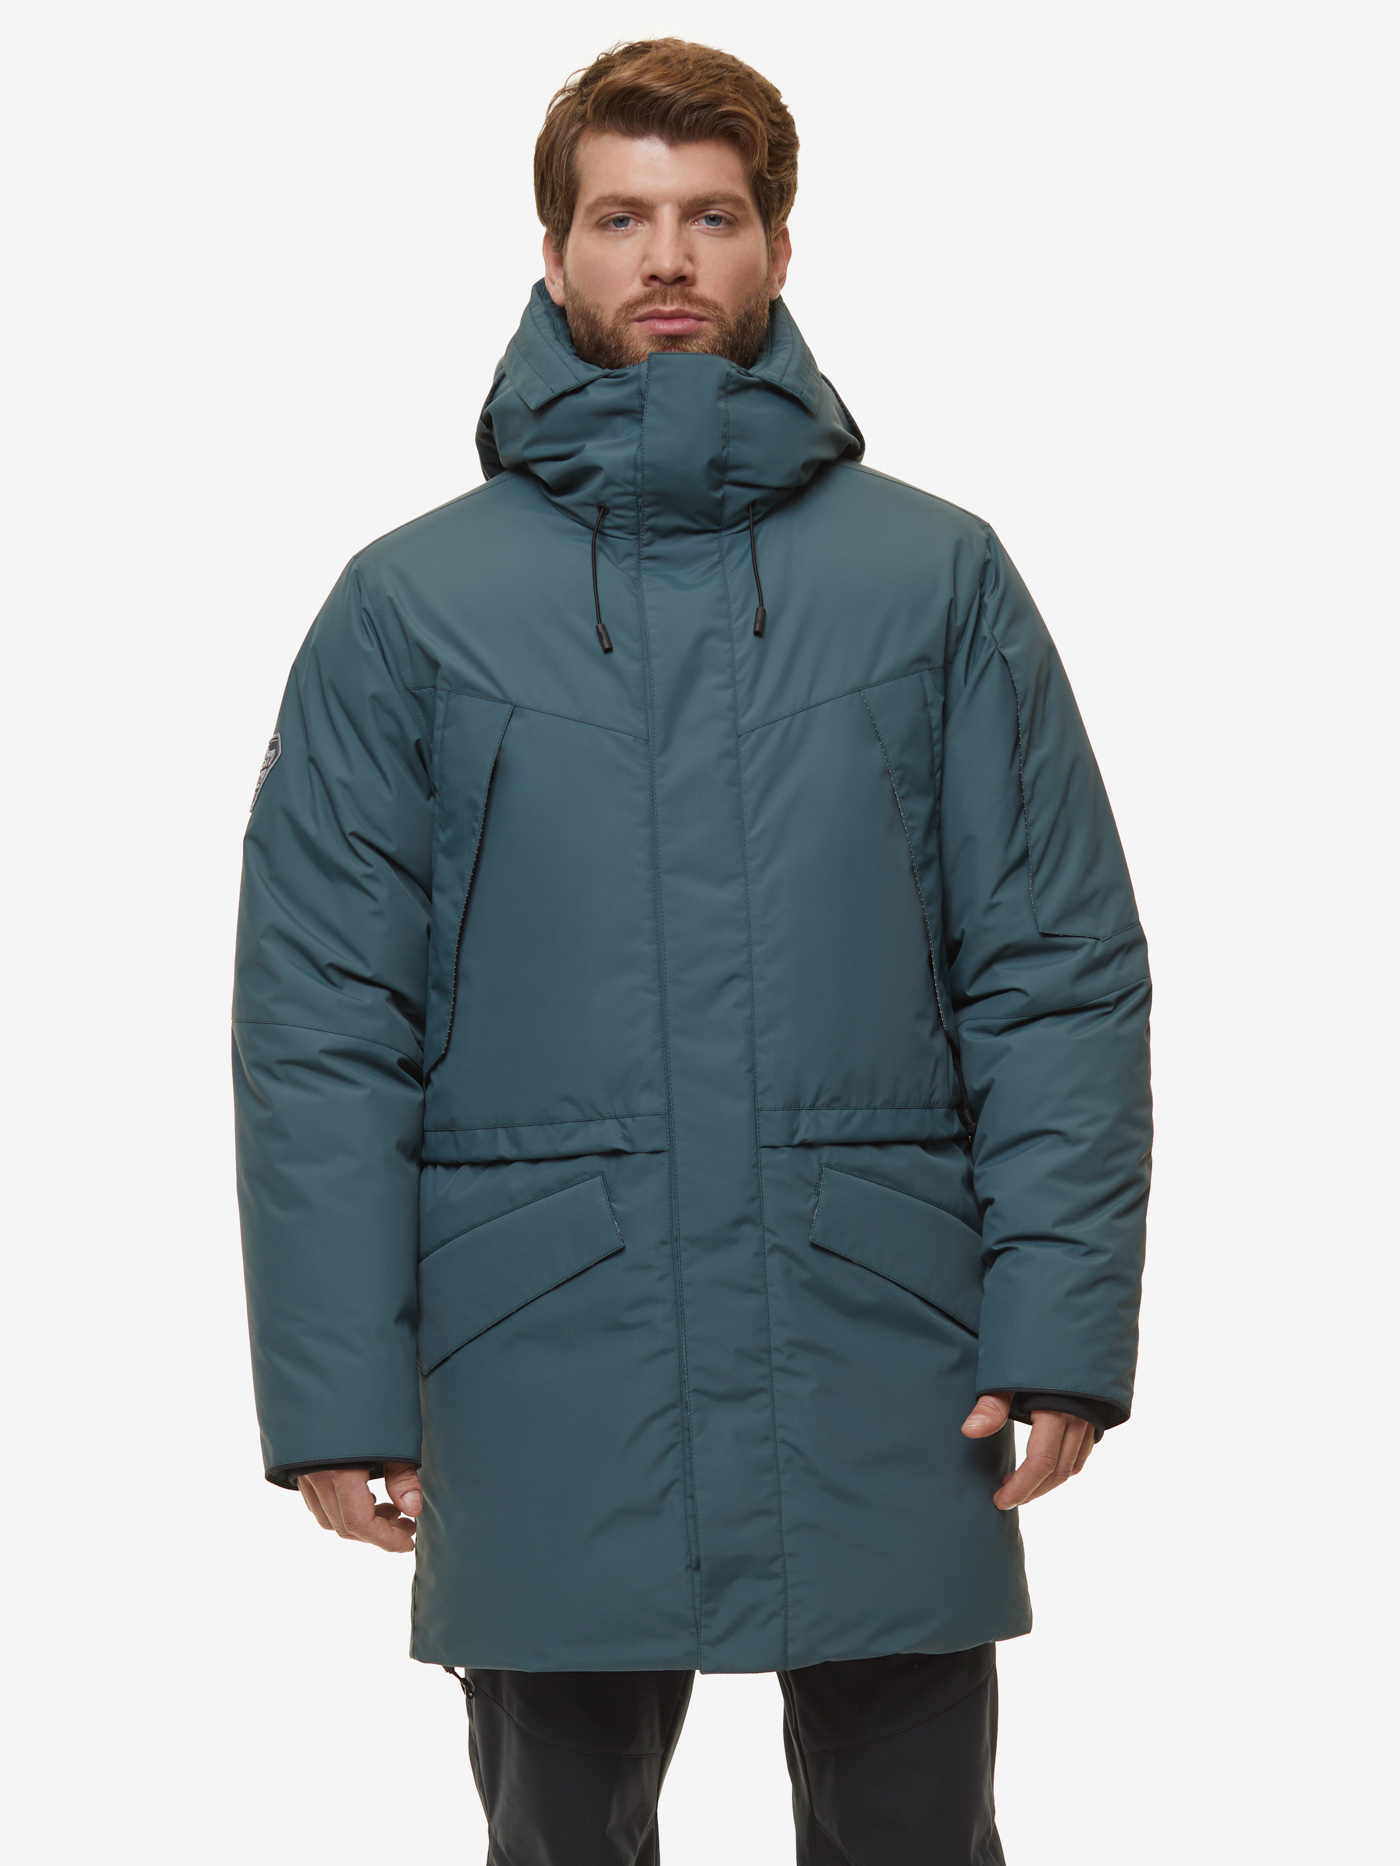 Куртка BASK, размер 60, цвет 9319 21228-9319-060 Alaska v3 - фото 3